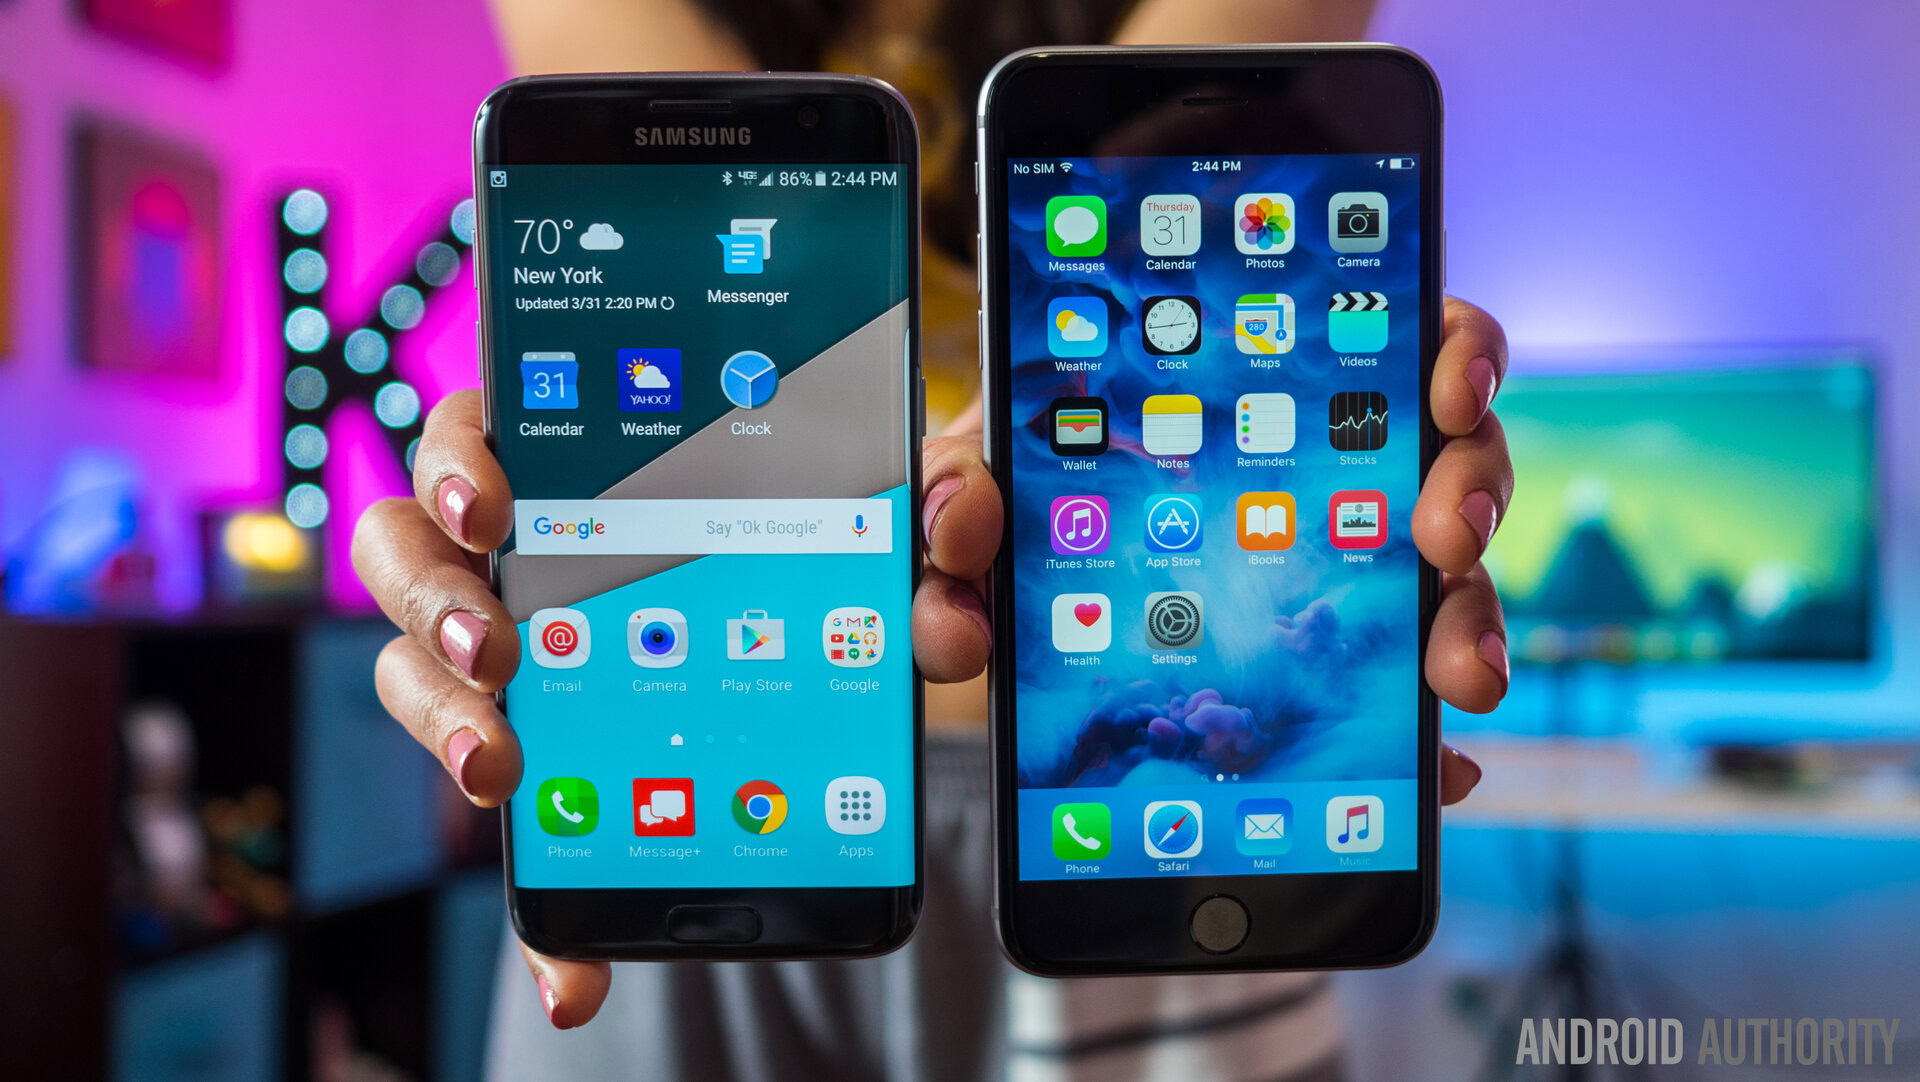 tekort vloeistof Weigering Samsung Galaxy S7 Edge vs iPhone 6s Plus - Android Authority